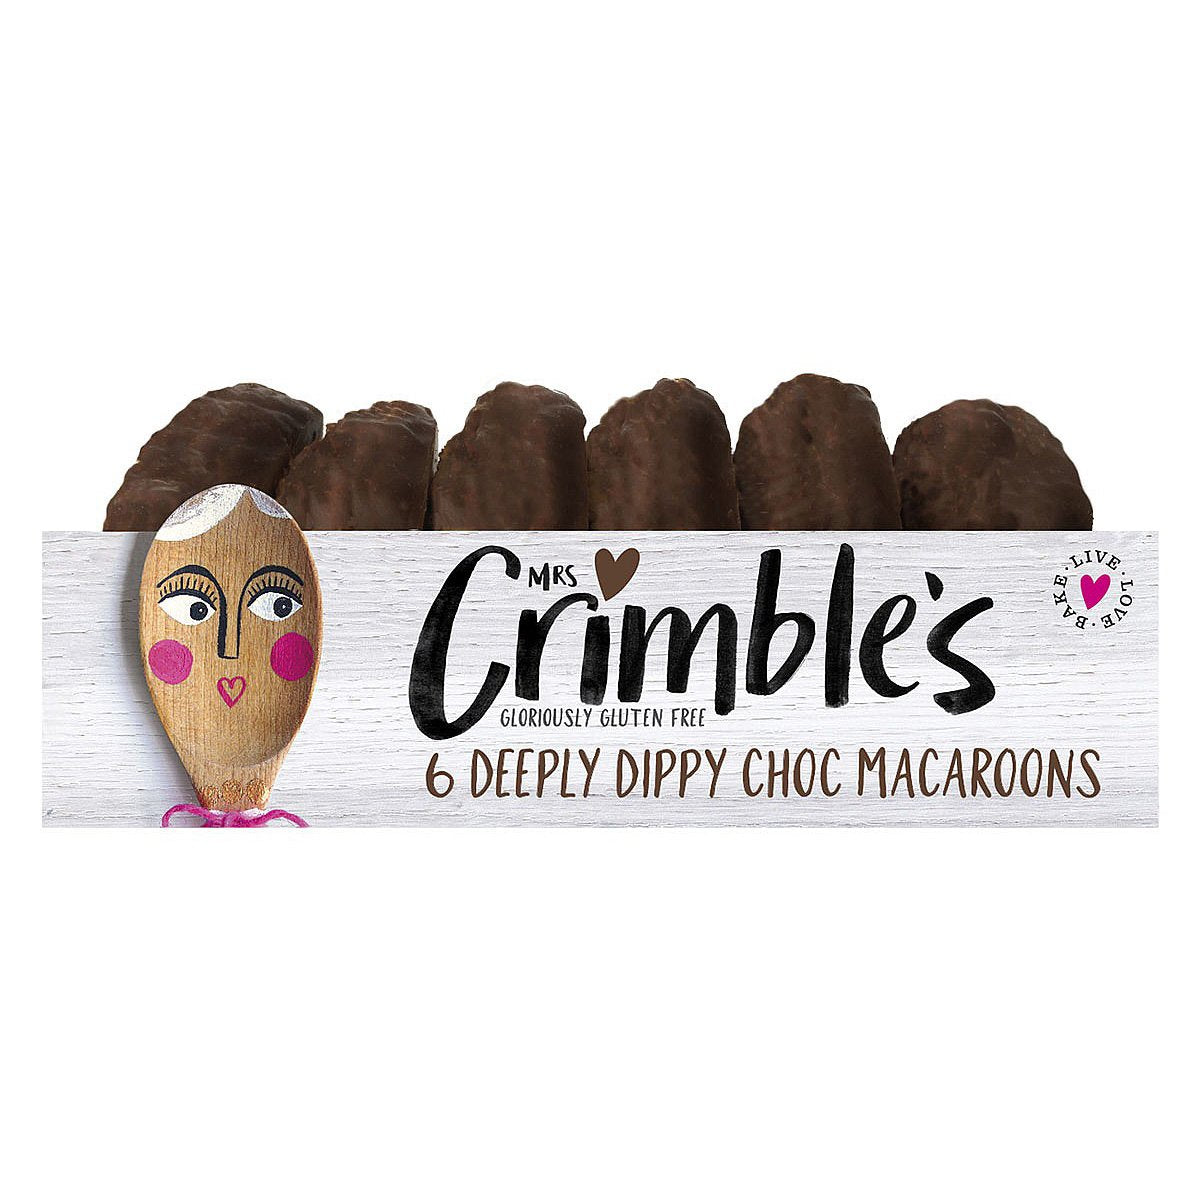 Mrs Crimbles 6 Deeply Dippy Choc Macaroons - Just Natural